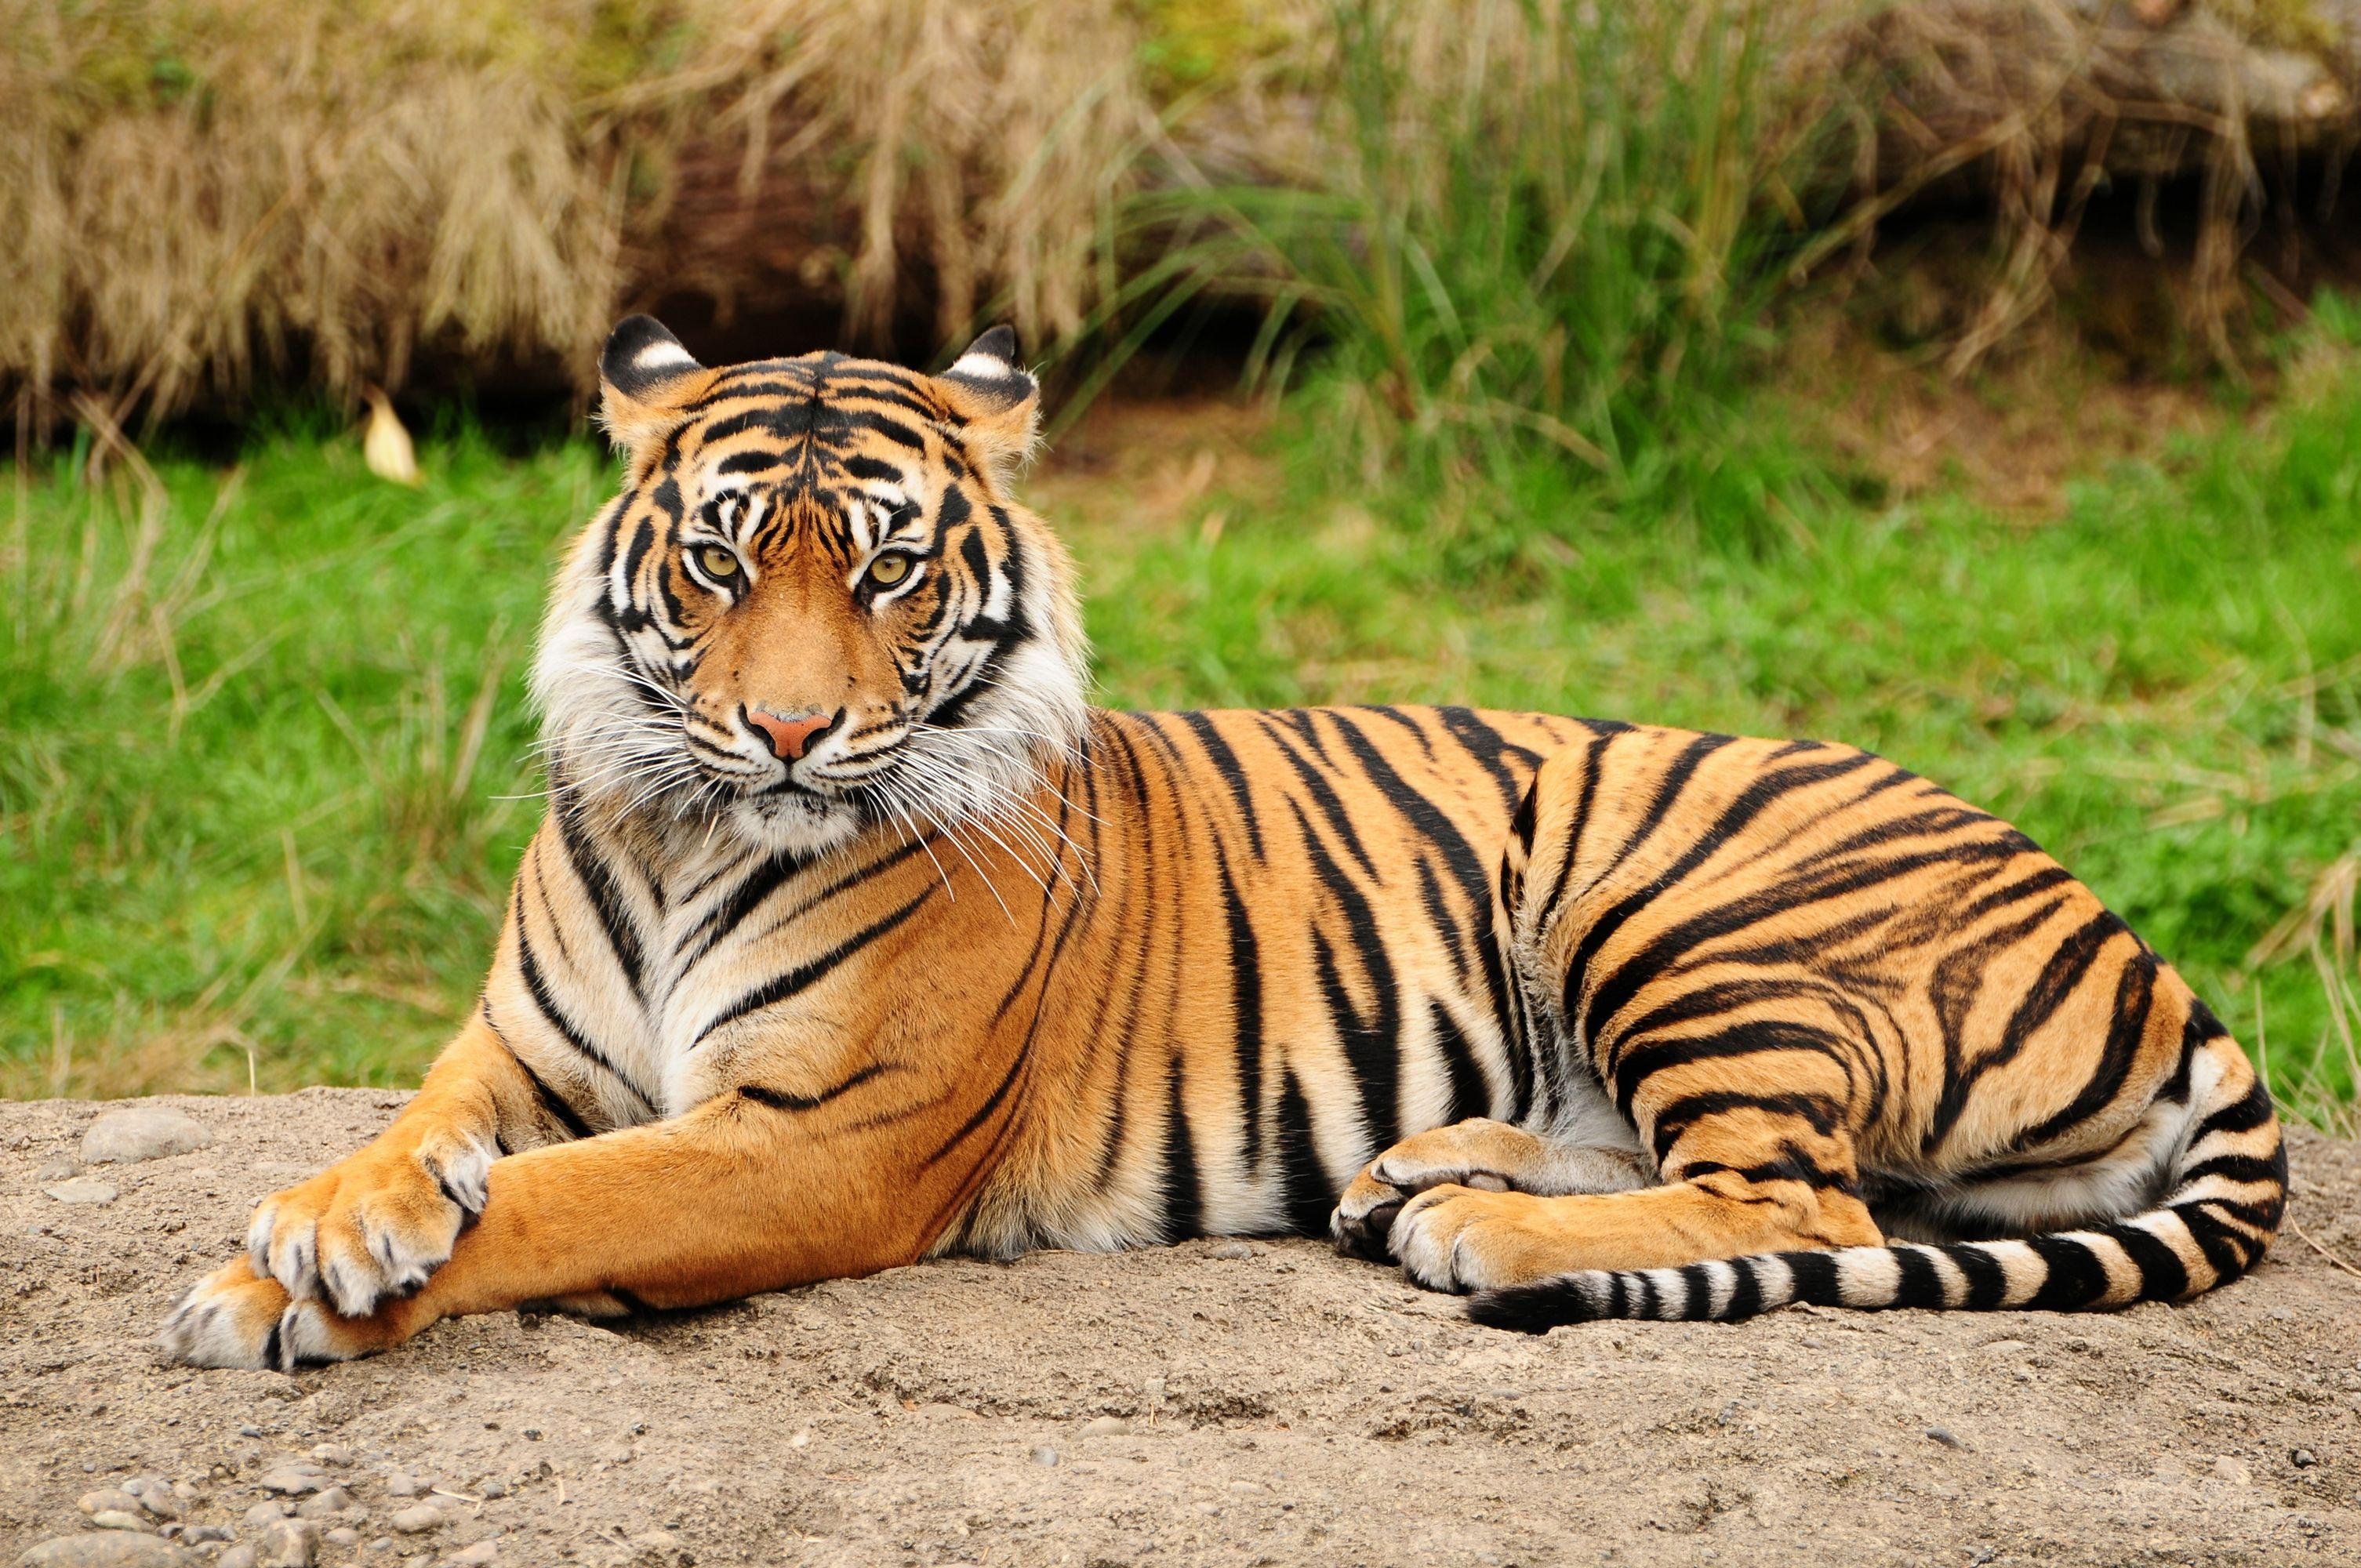 24600 Bengal Tiger Stock Photos Pictures  RoyaltyFree Images  iStock   Royal bengal tiger Bengal tiger cub Bengal tiger white background